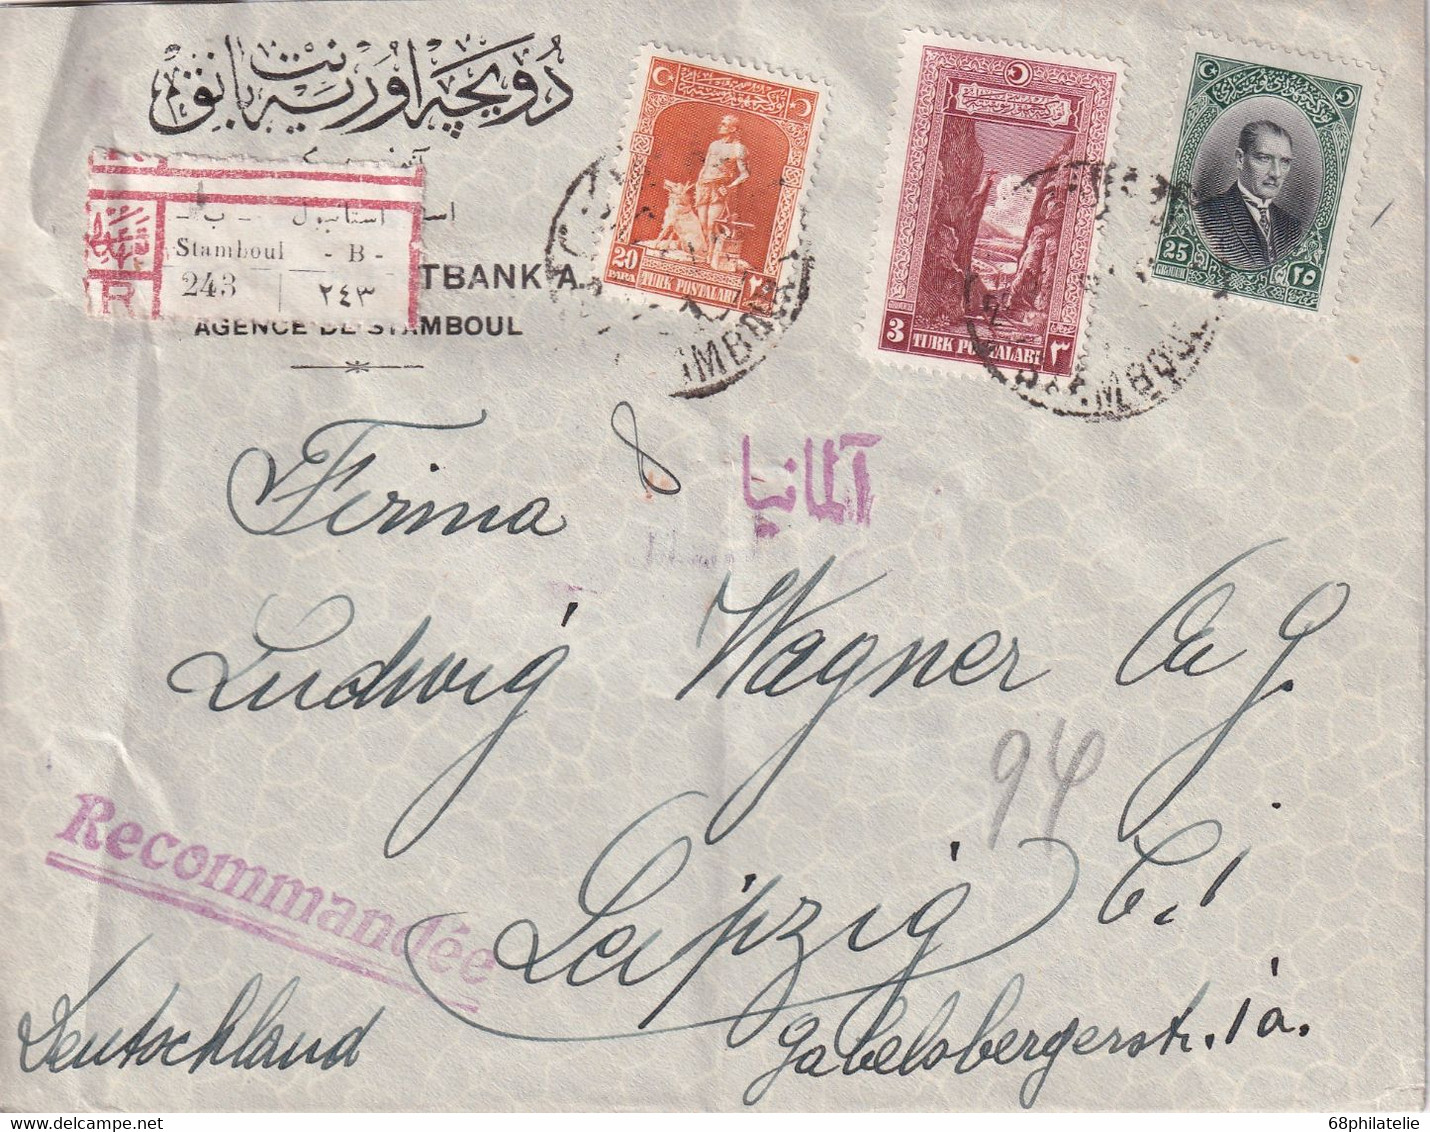 TURQUIE LETTRE RECOMMANDEE DE STAMBOUL 1928 - Covers & Documents